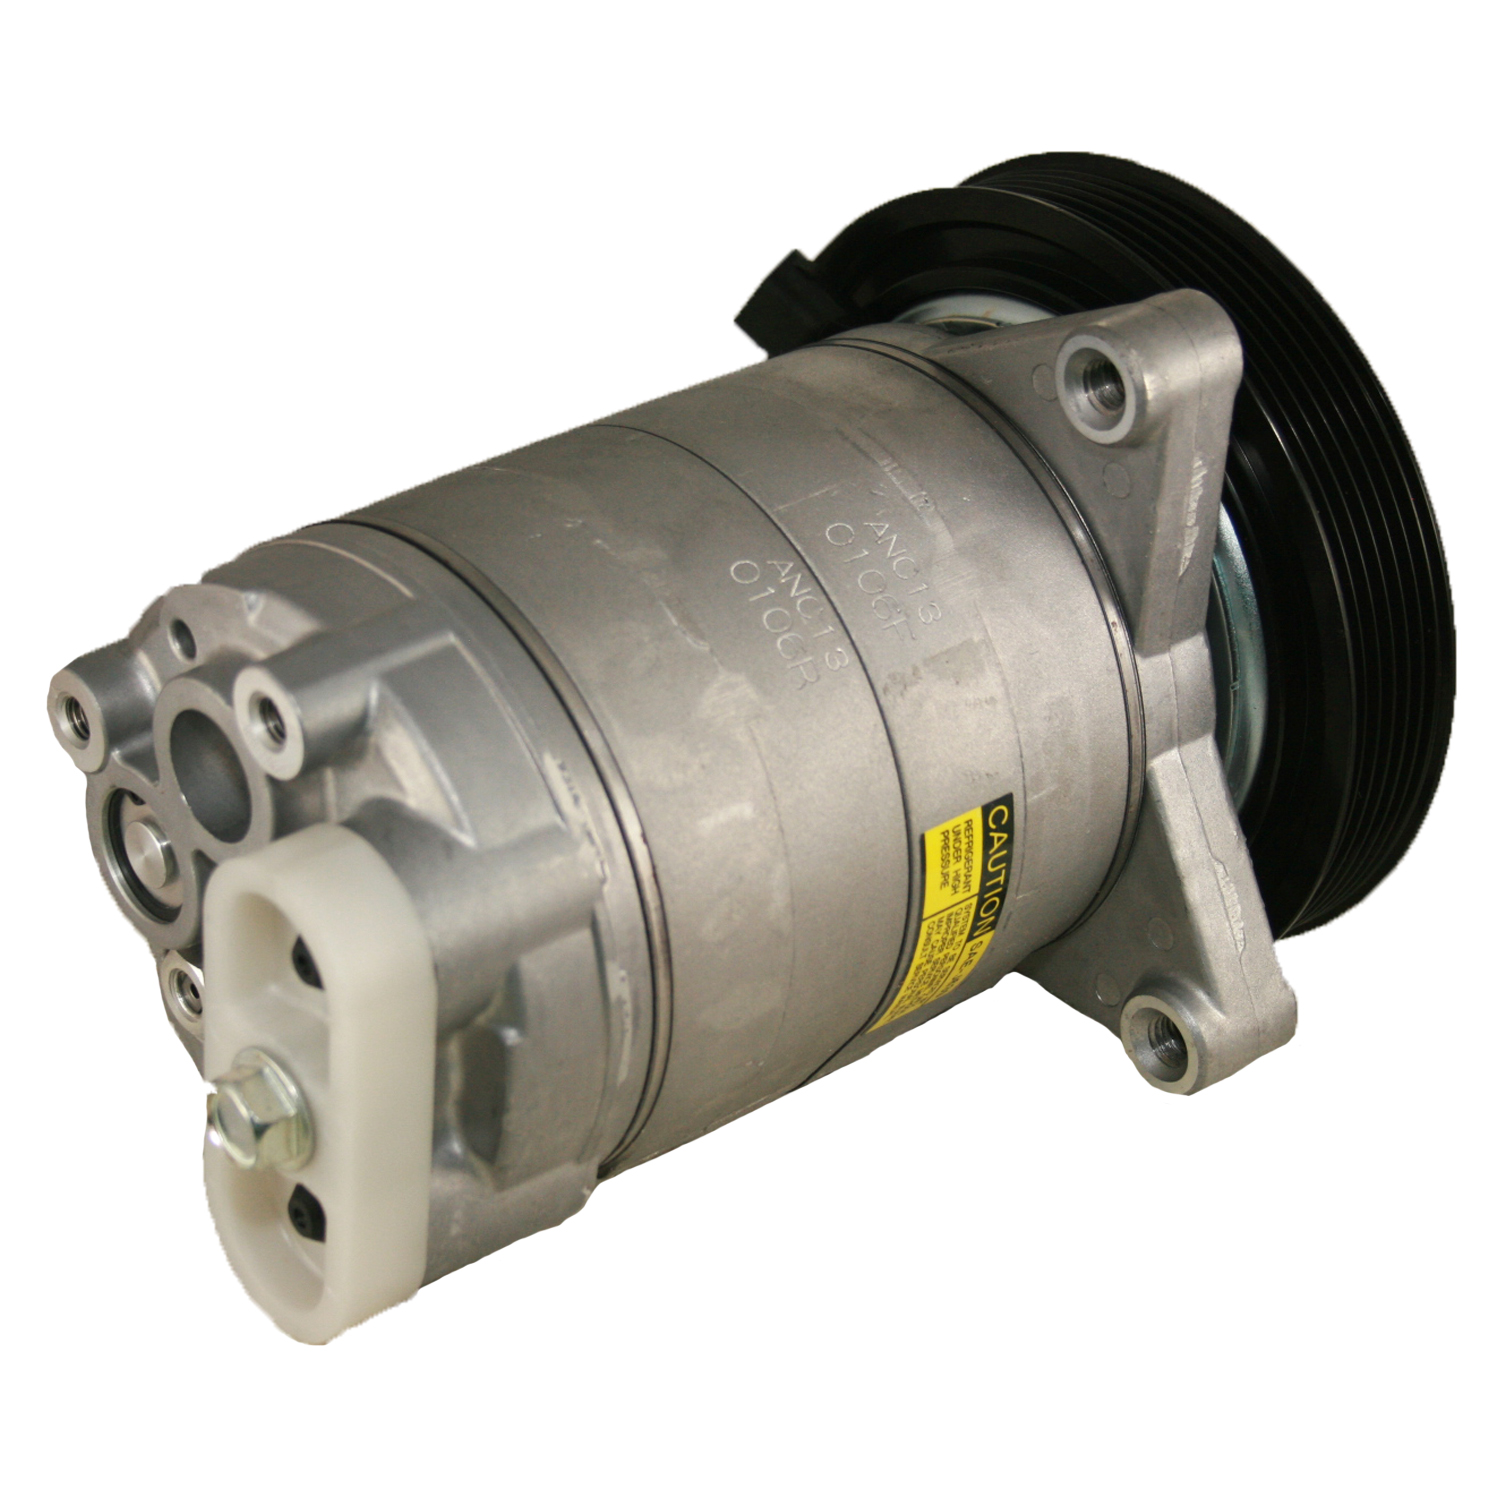 TCW Compressor 15-20352 New Product Image field_60b6a13a6e67c